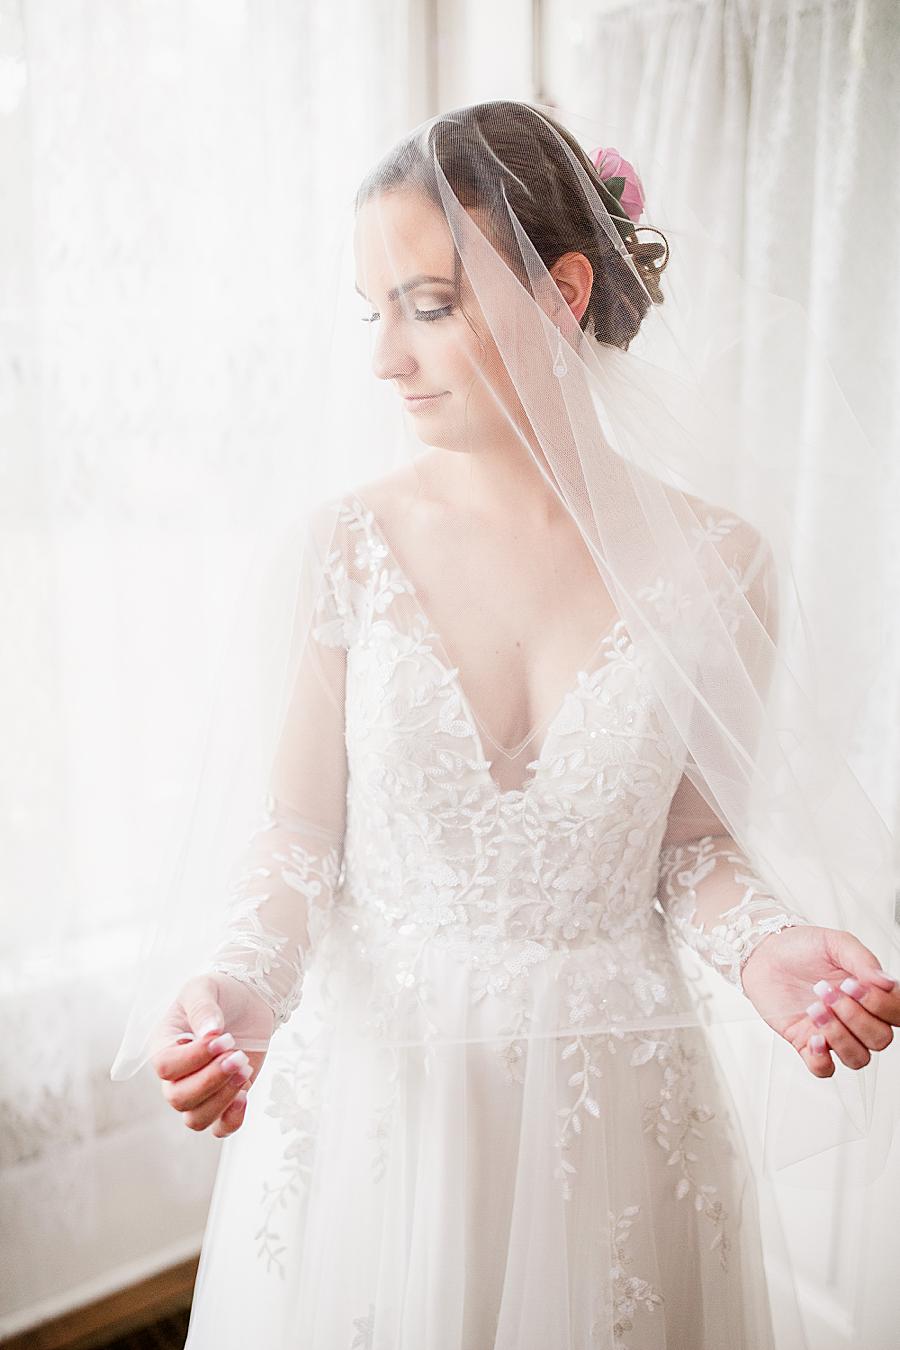 Blusher veil at this Cardwell Manor Wedding by Knoxville Wedding Photographer, Amanda May Photos.